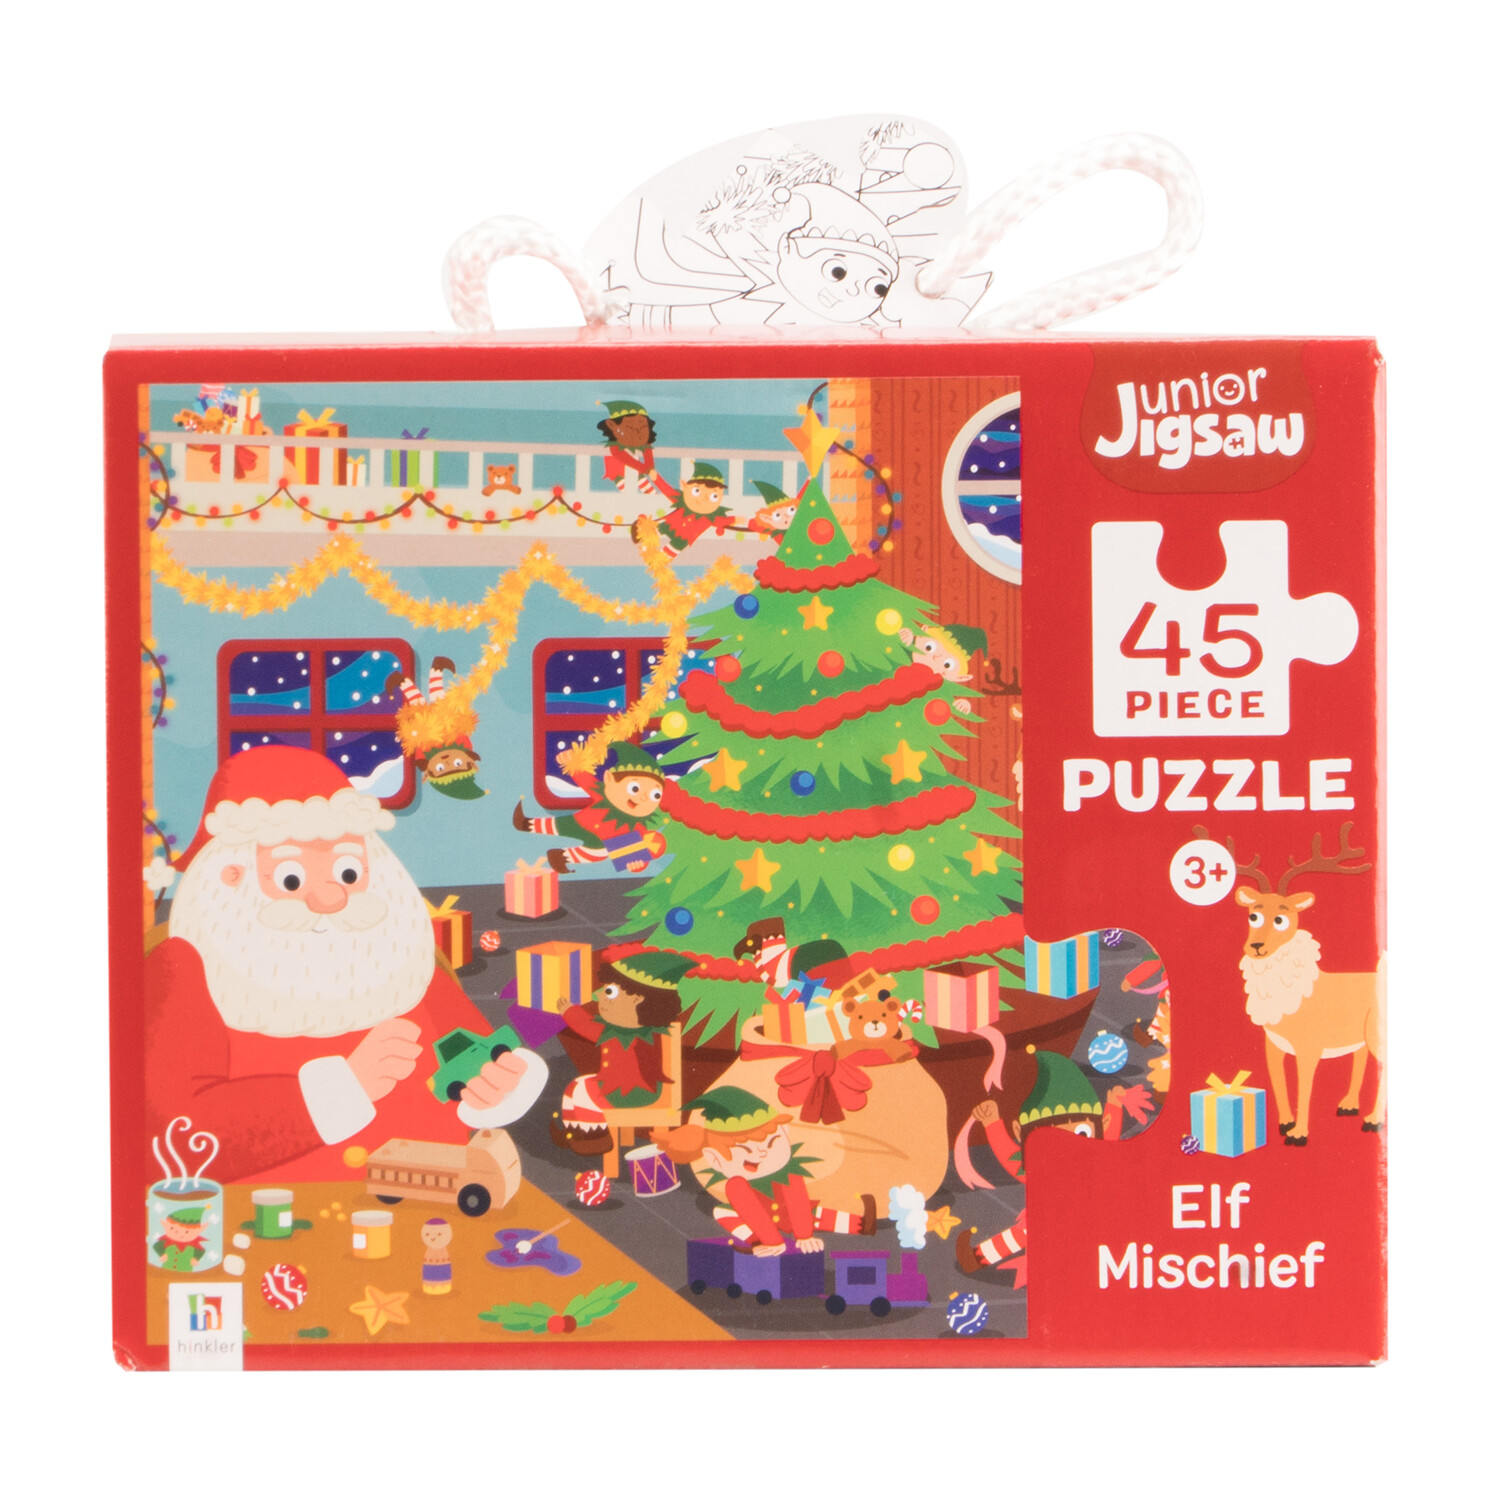 45-Piece Elf Mischief Puzzle Image